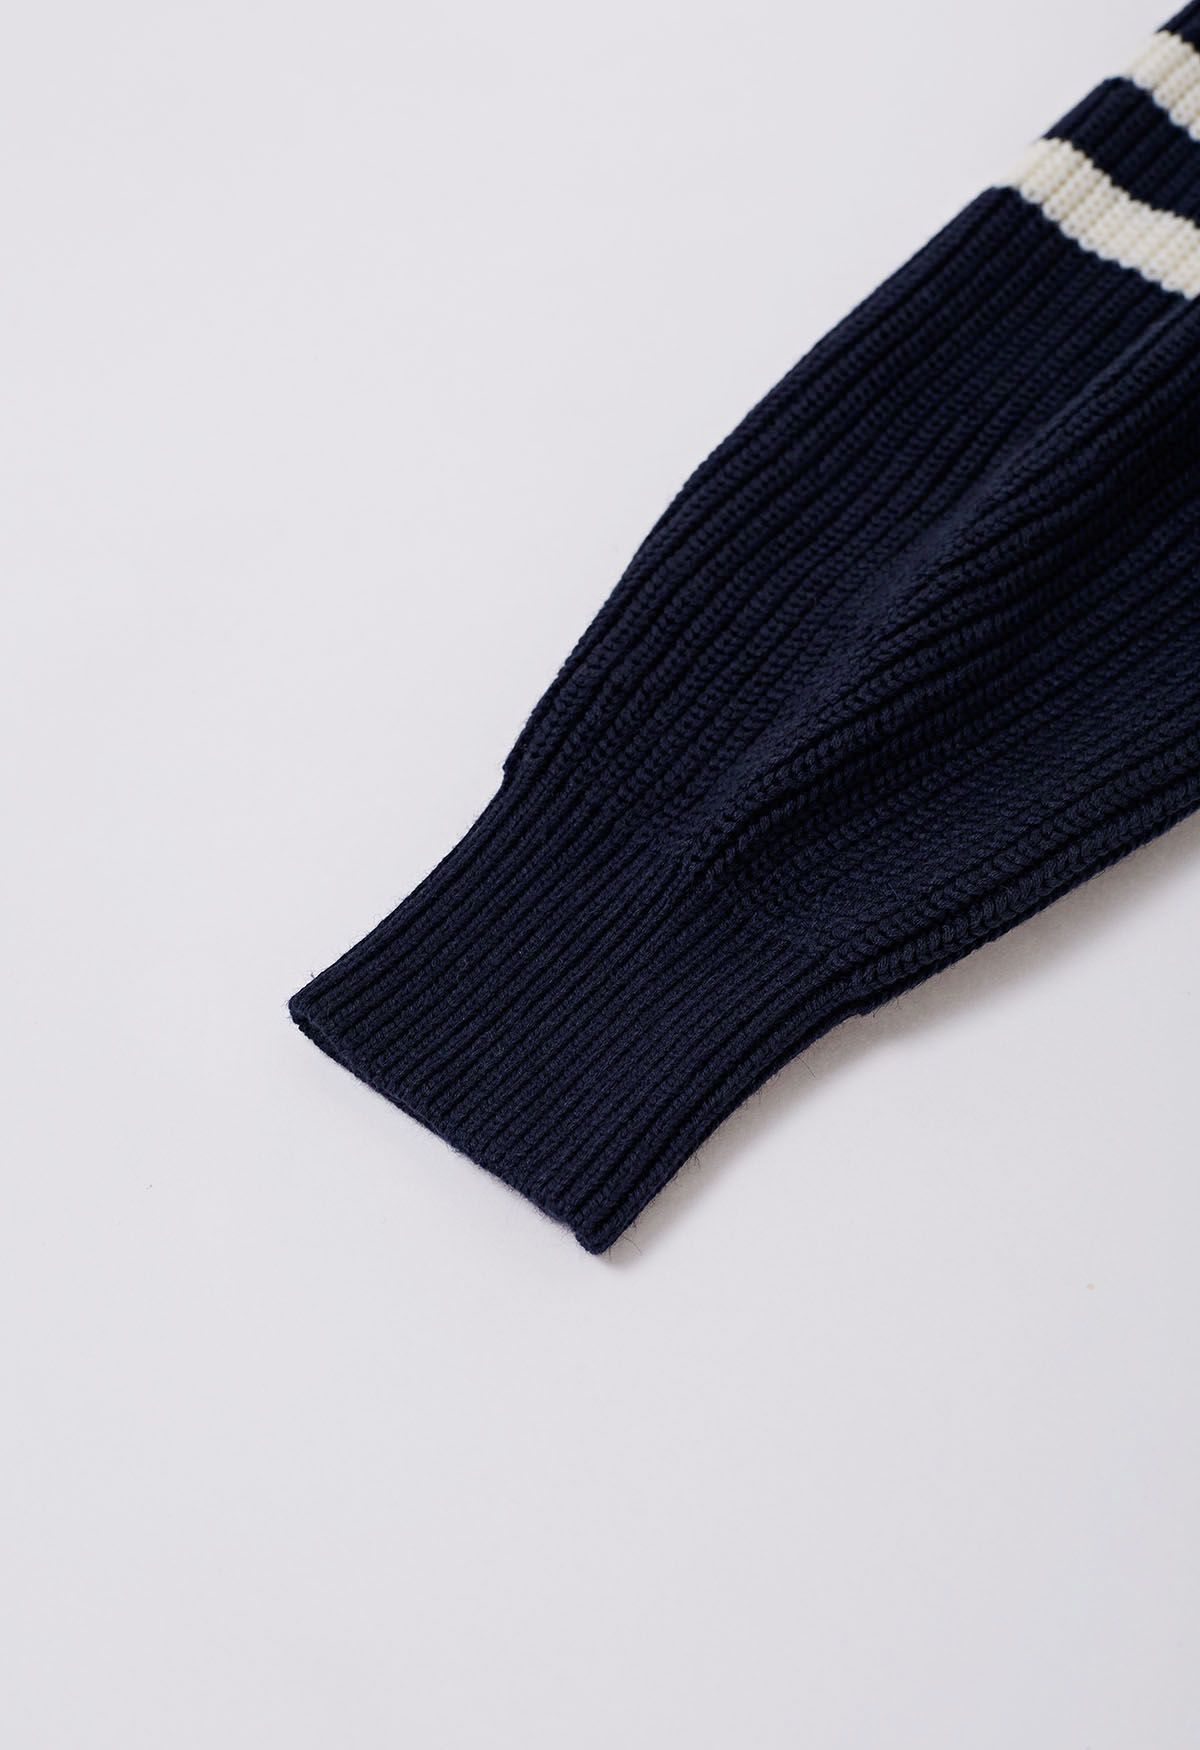 Flap Collar Zipper Neck Striped Knit Sweater in Navy